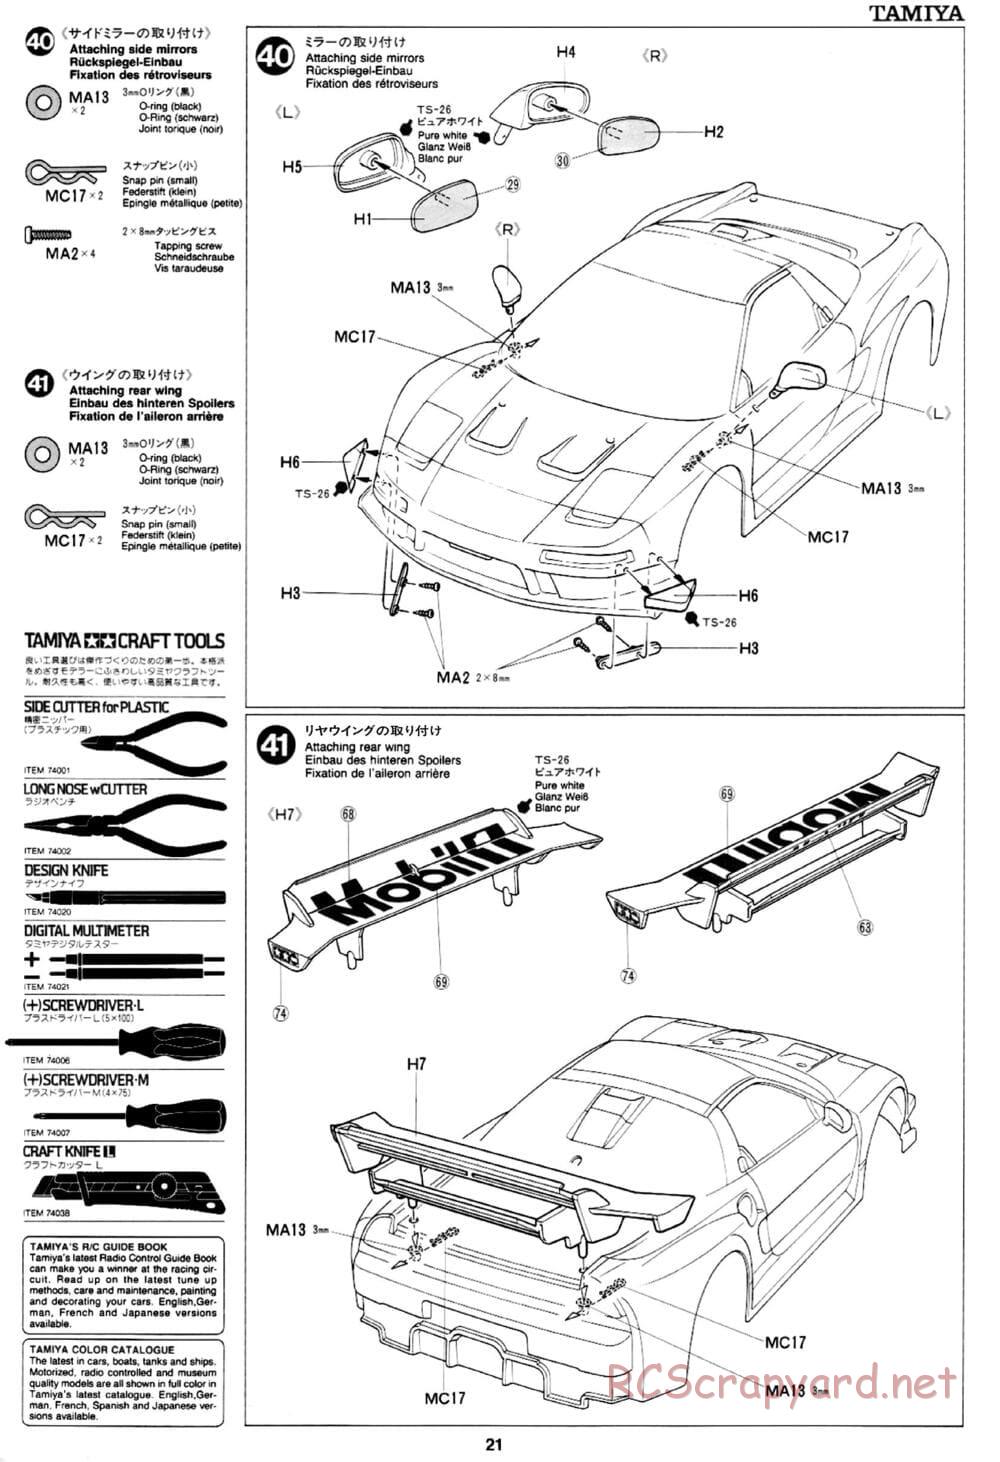 Tamiya - Mobil 1 NSX - TA-03R Chassis - Manual - Page 21